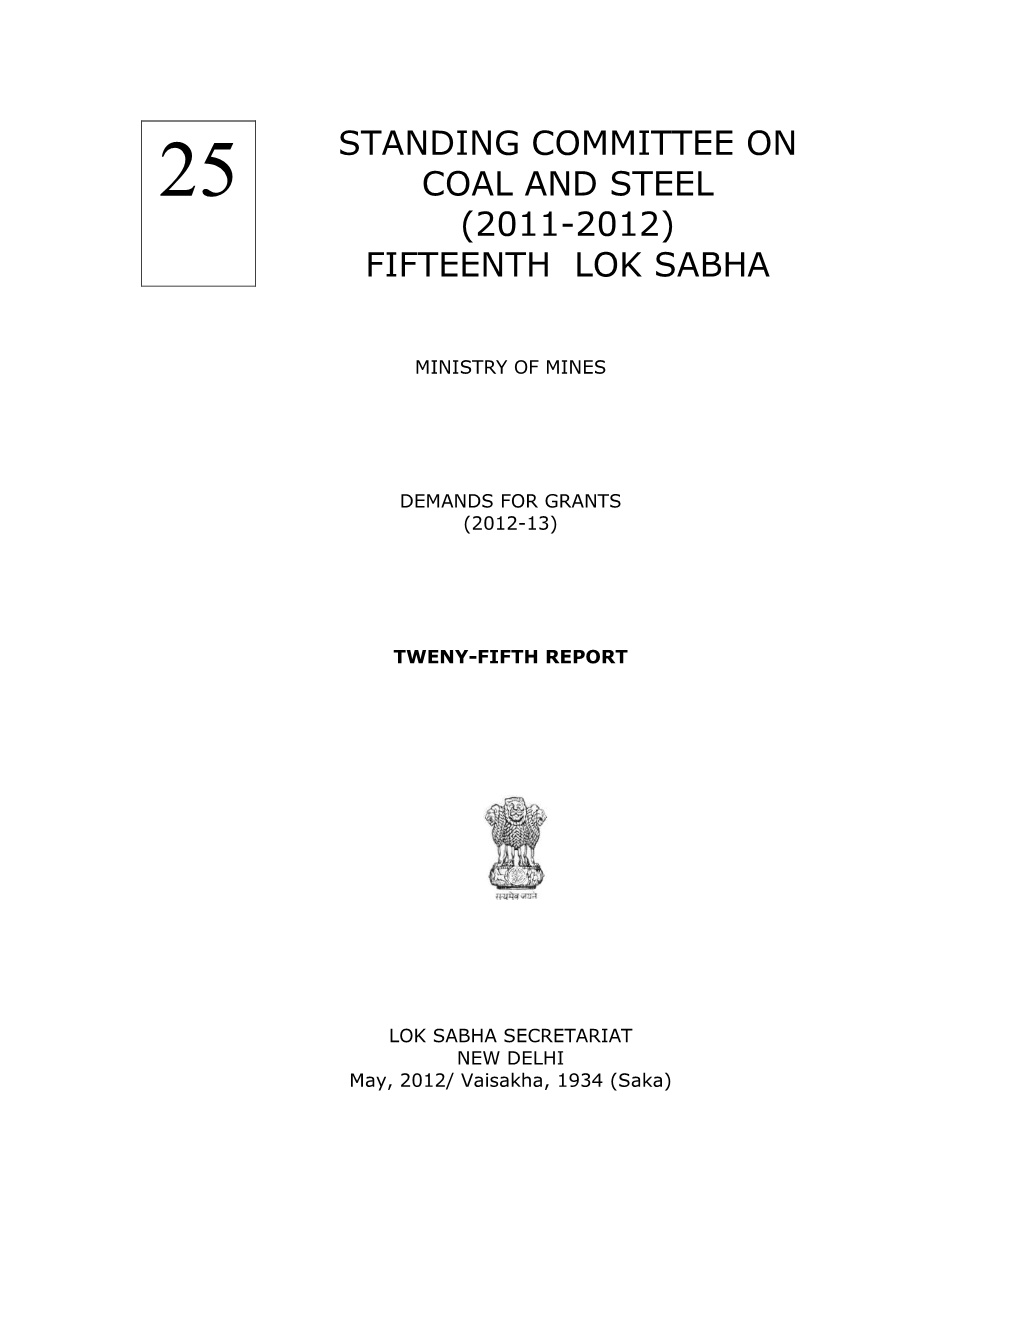 Standing Committee on Coal and Steel (2011-2012) Fifteenth Lok Sabha